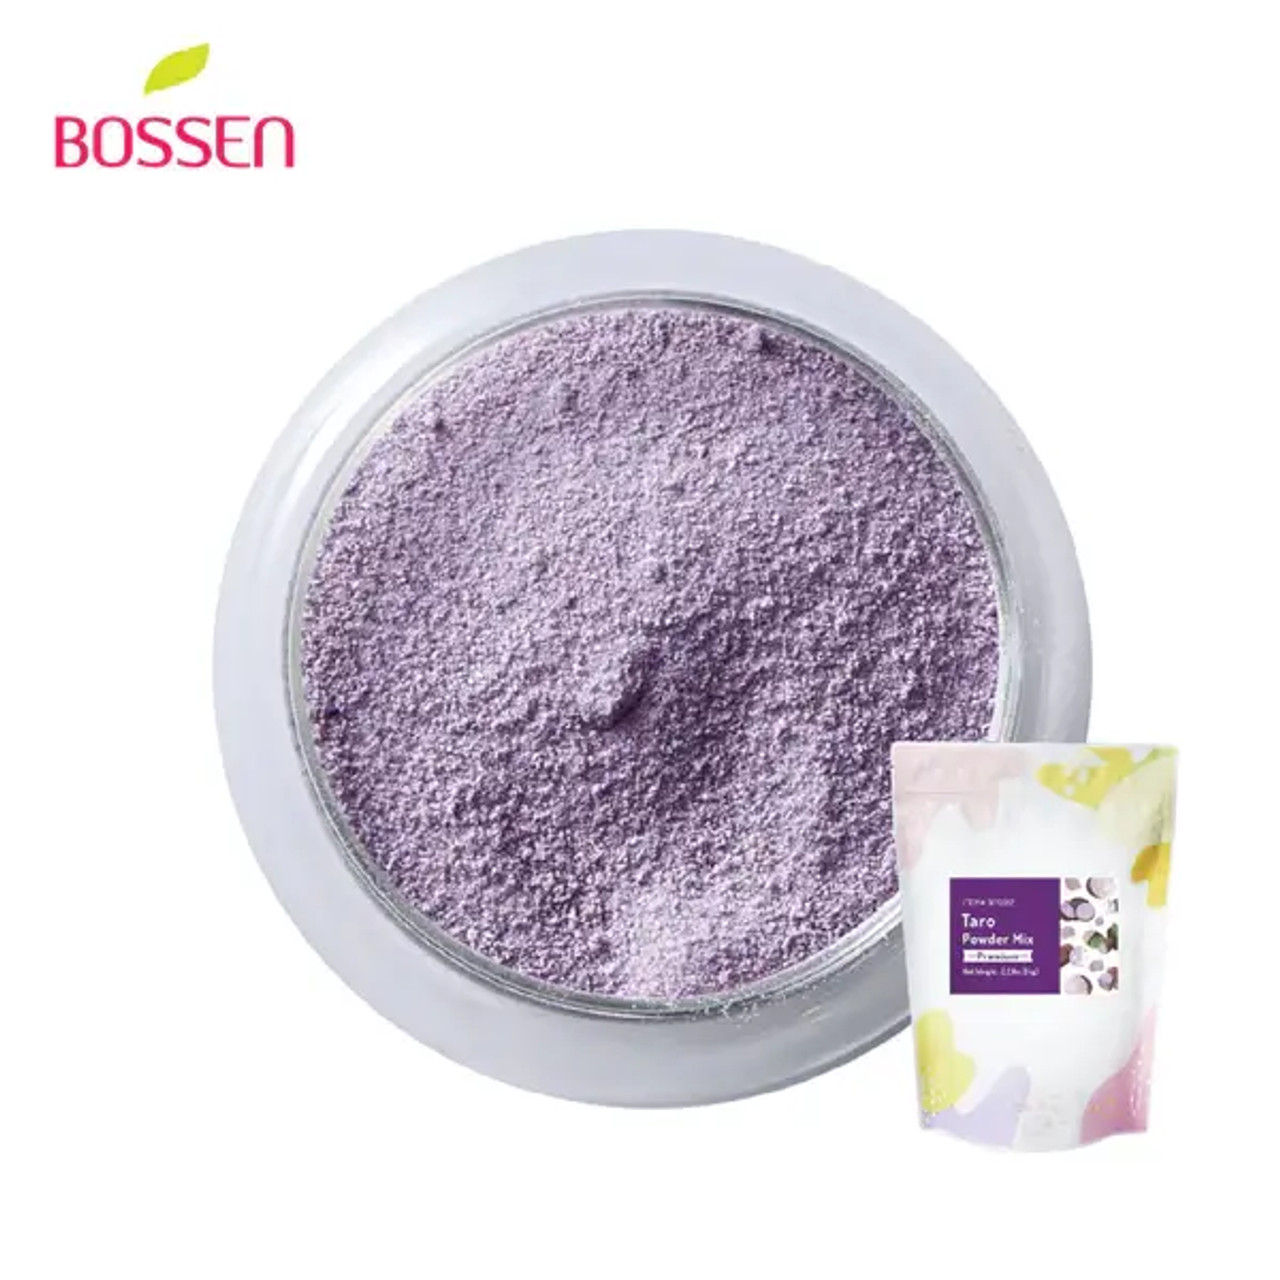 Bossen 1 kg (2.2 lb.) Premium Taro Powder Mix - Creamy Delight for Bubble Tea(10/Case)-Chicken Pieces